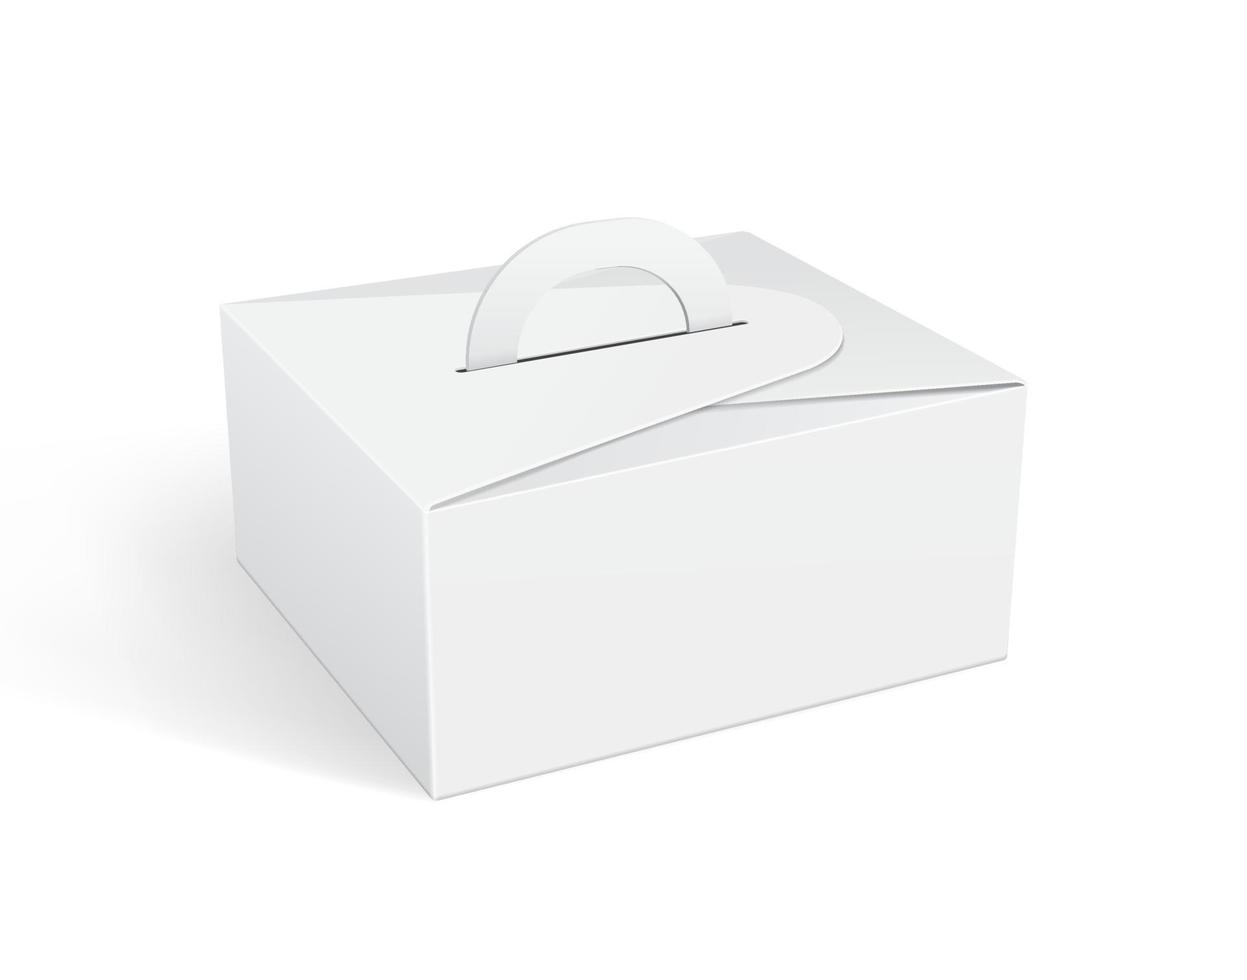 Paper food box packaging mockups vector